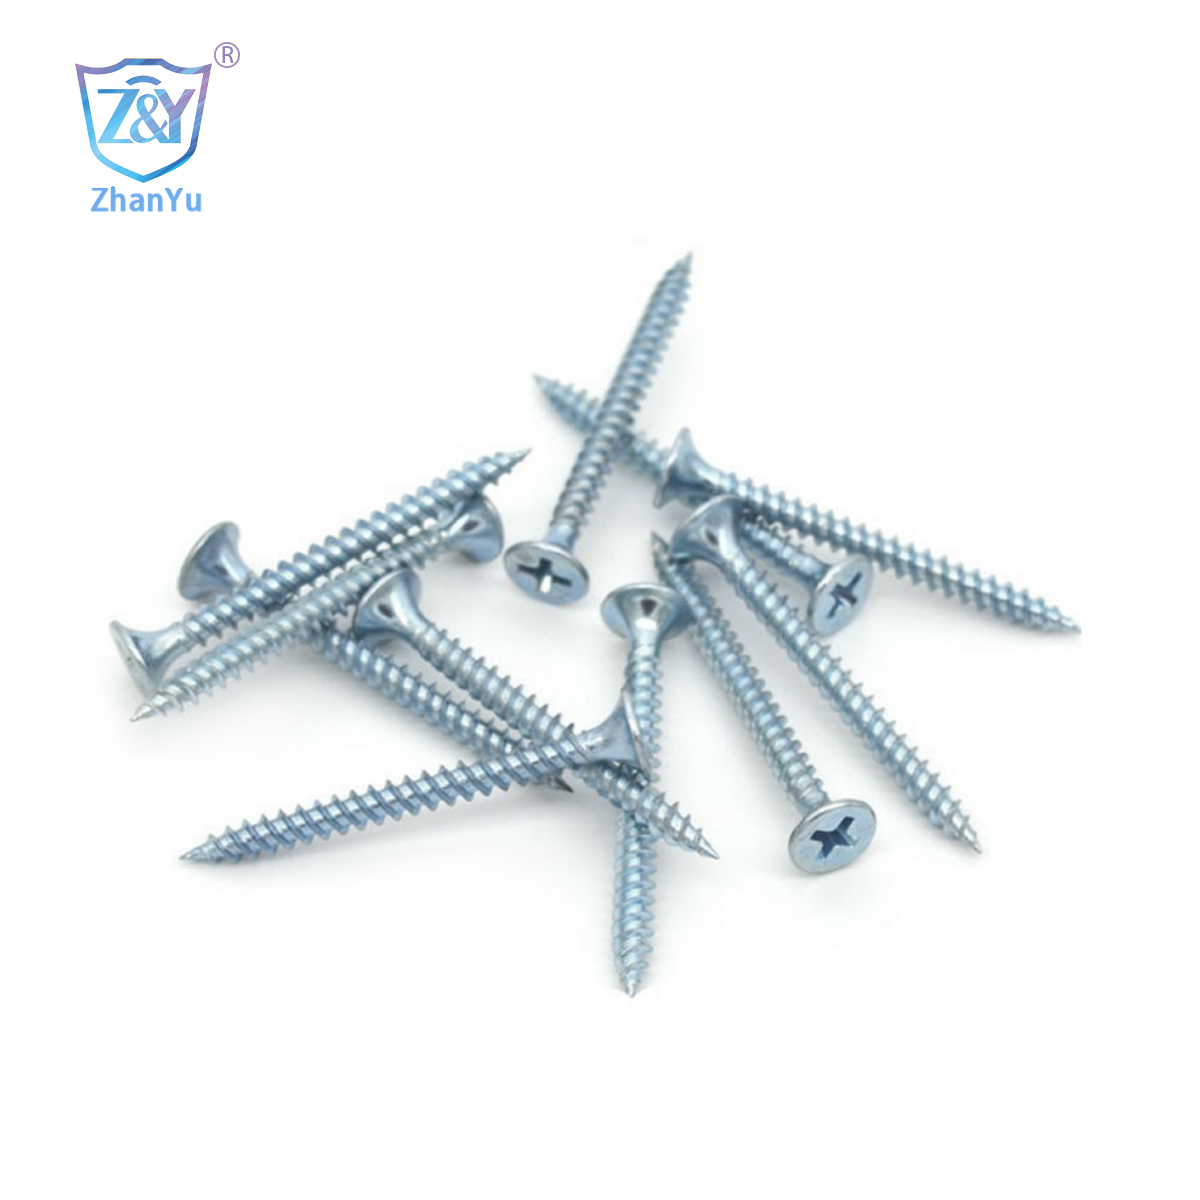 Screws drywall ສັງກະສີ C1022A ແມ່ນຄຸນນະພາບສູງທີ່ໄດ້ຮັບຄວາມຮ້ອນ / ສັງກະສີສີຂາວ / ສີສັງກະສີ / ສັງກະສີ trivalent ຮູບພາບທີ່ໂດດເດັ່ນ